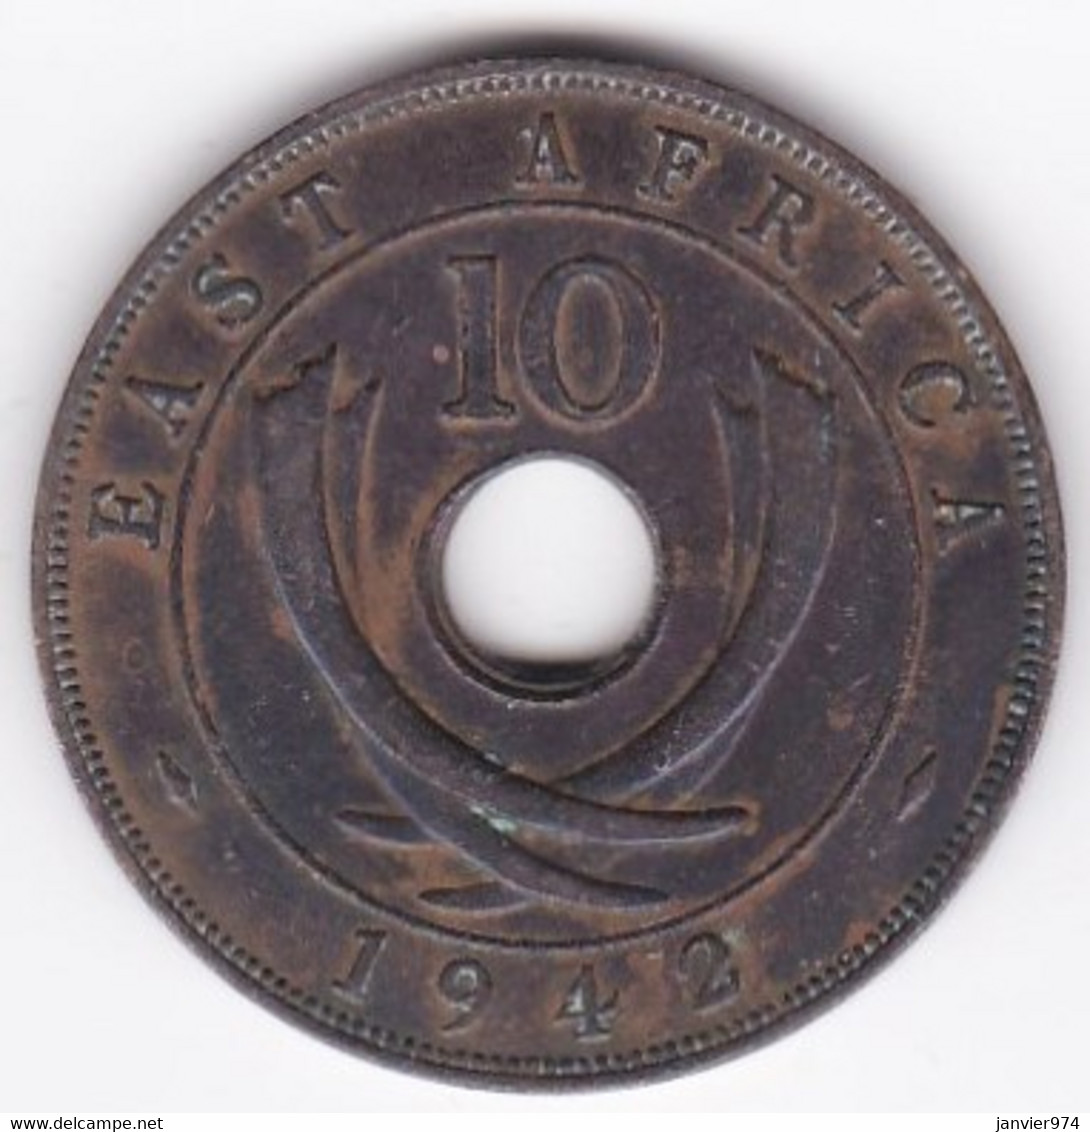 East Africa 10 Cents 1942  George VI, En Bronze , KM# 26 - Colonia Britannica